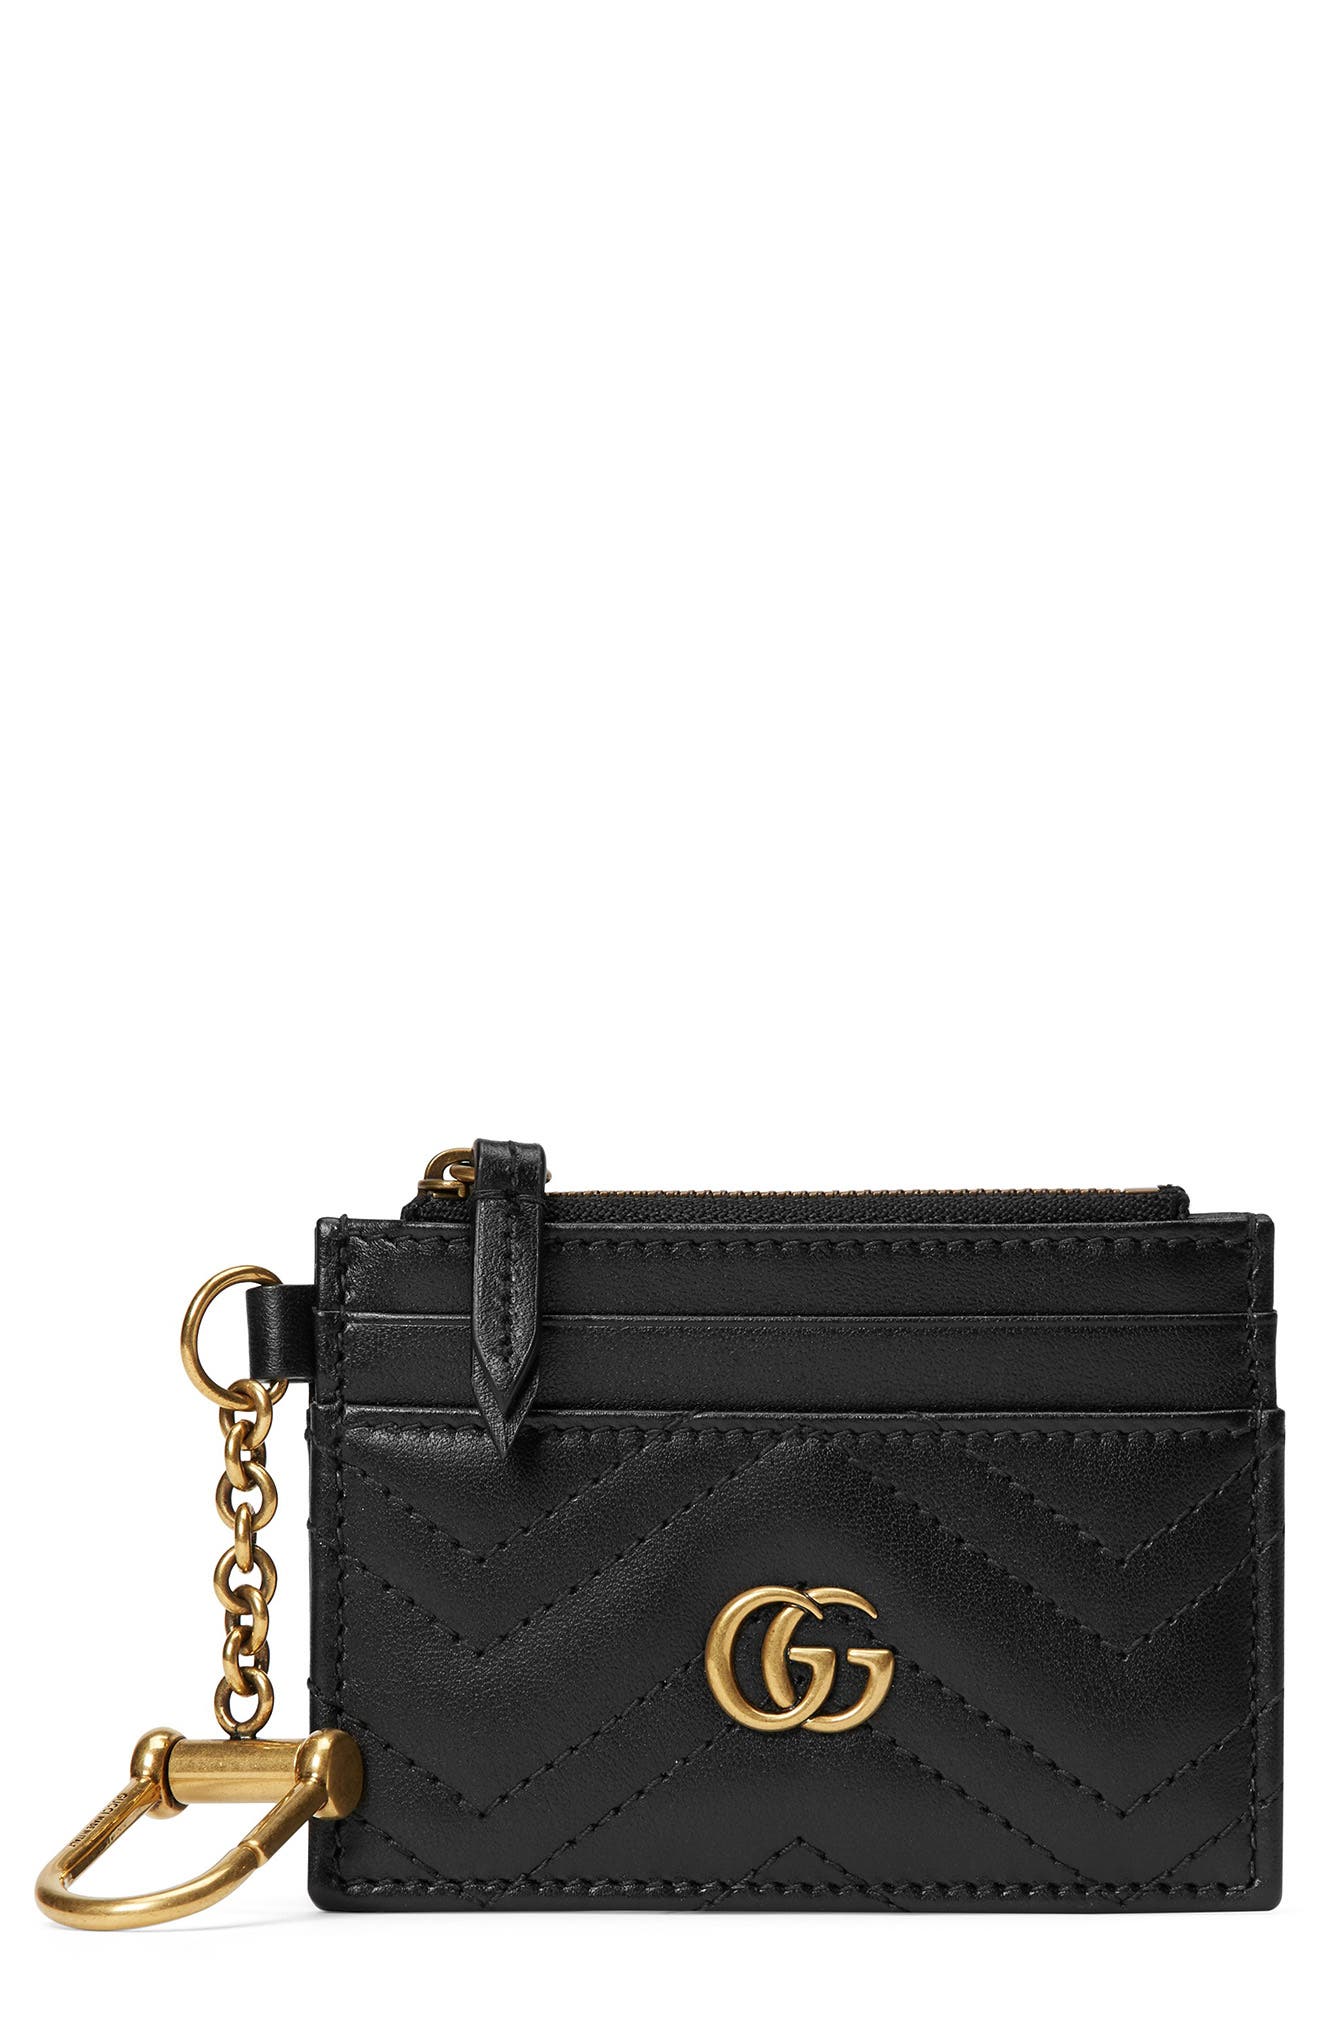 gucci key purse